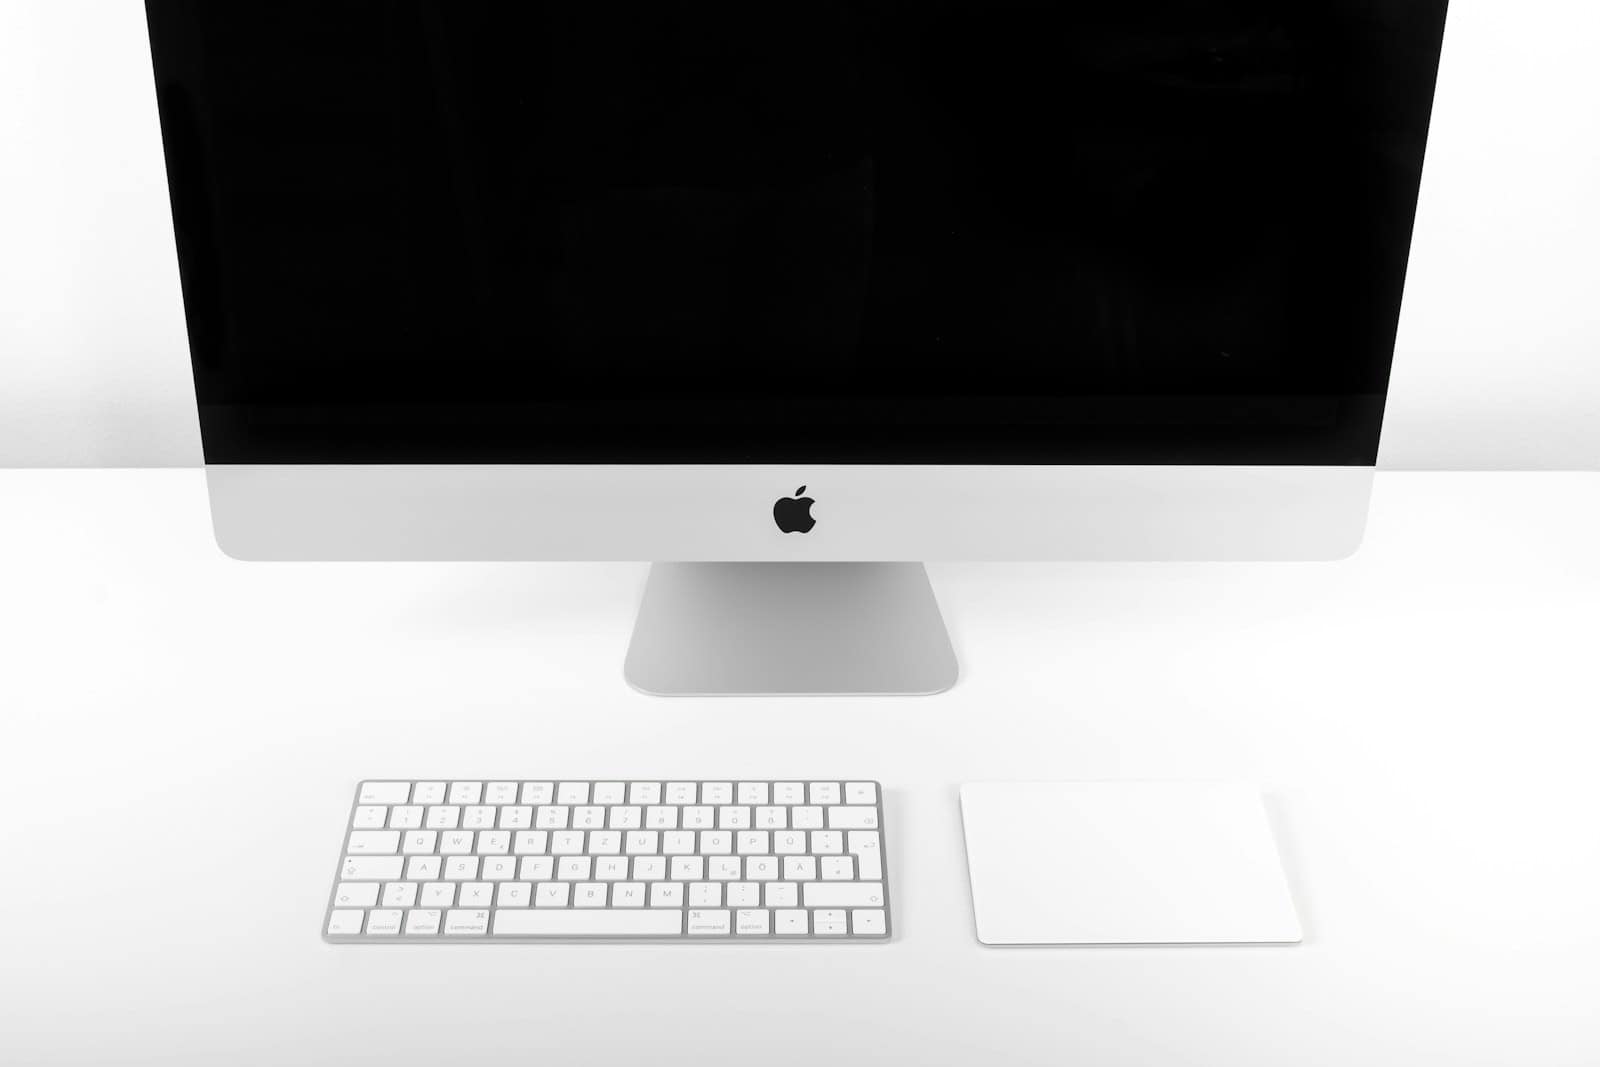 iMac turned off on white desk